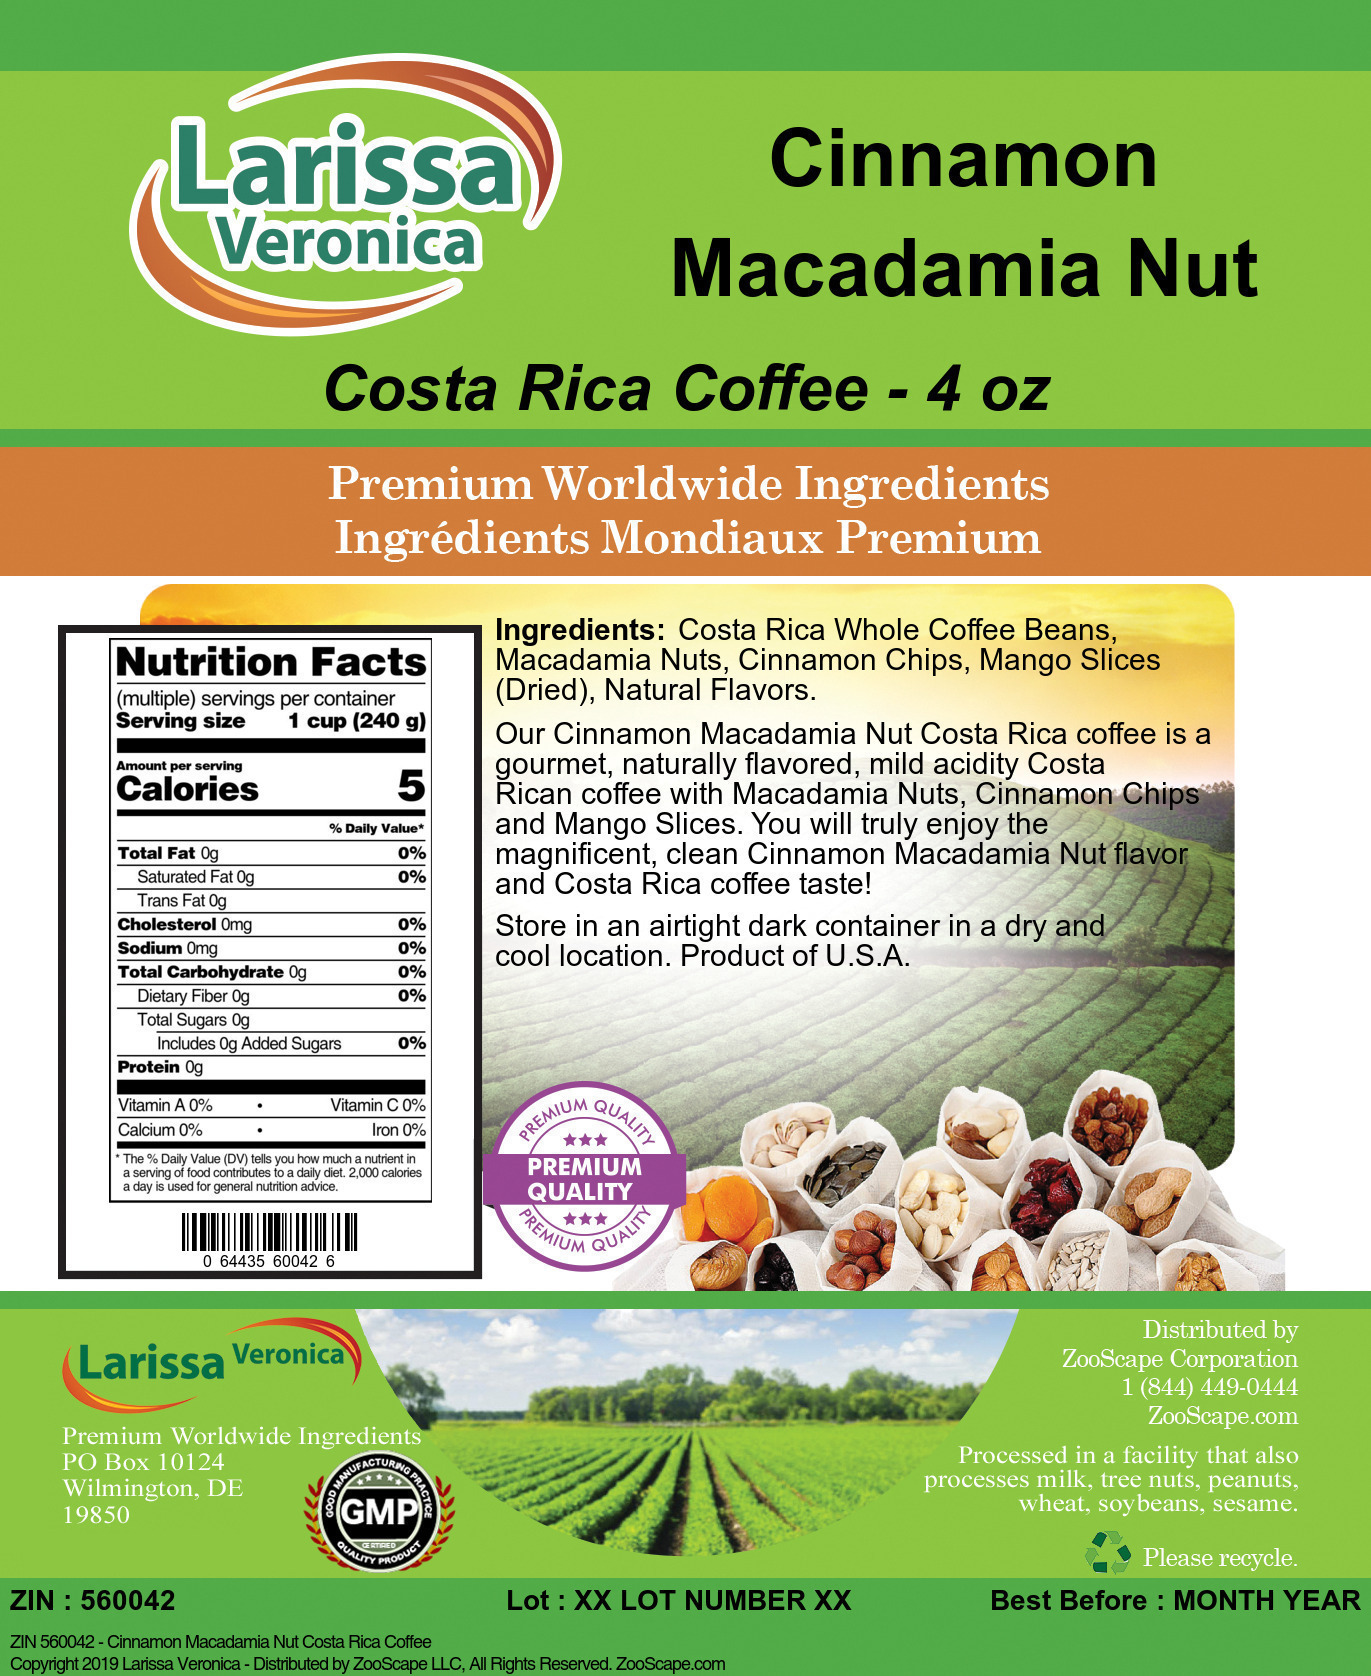 Cinnamon Macadamia Nut Costa Rica Coffee - Label